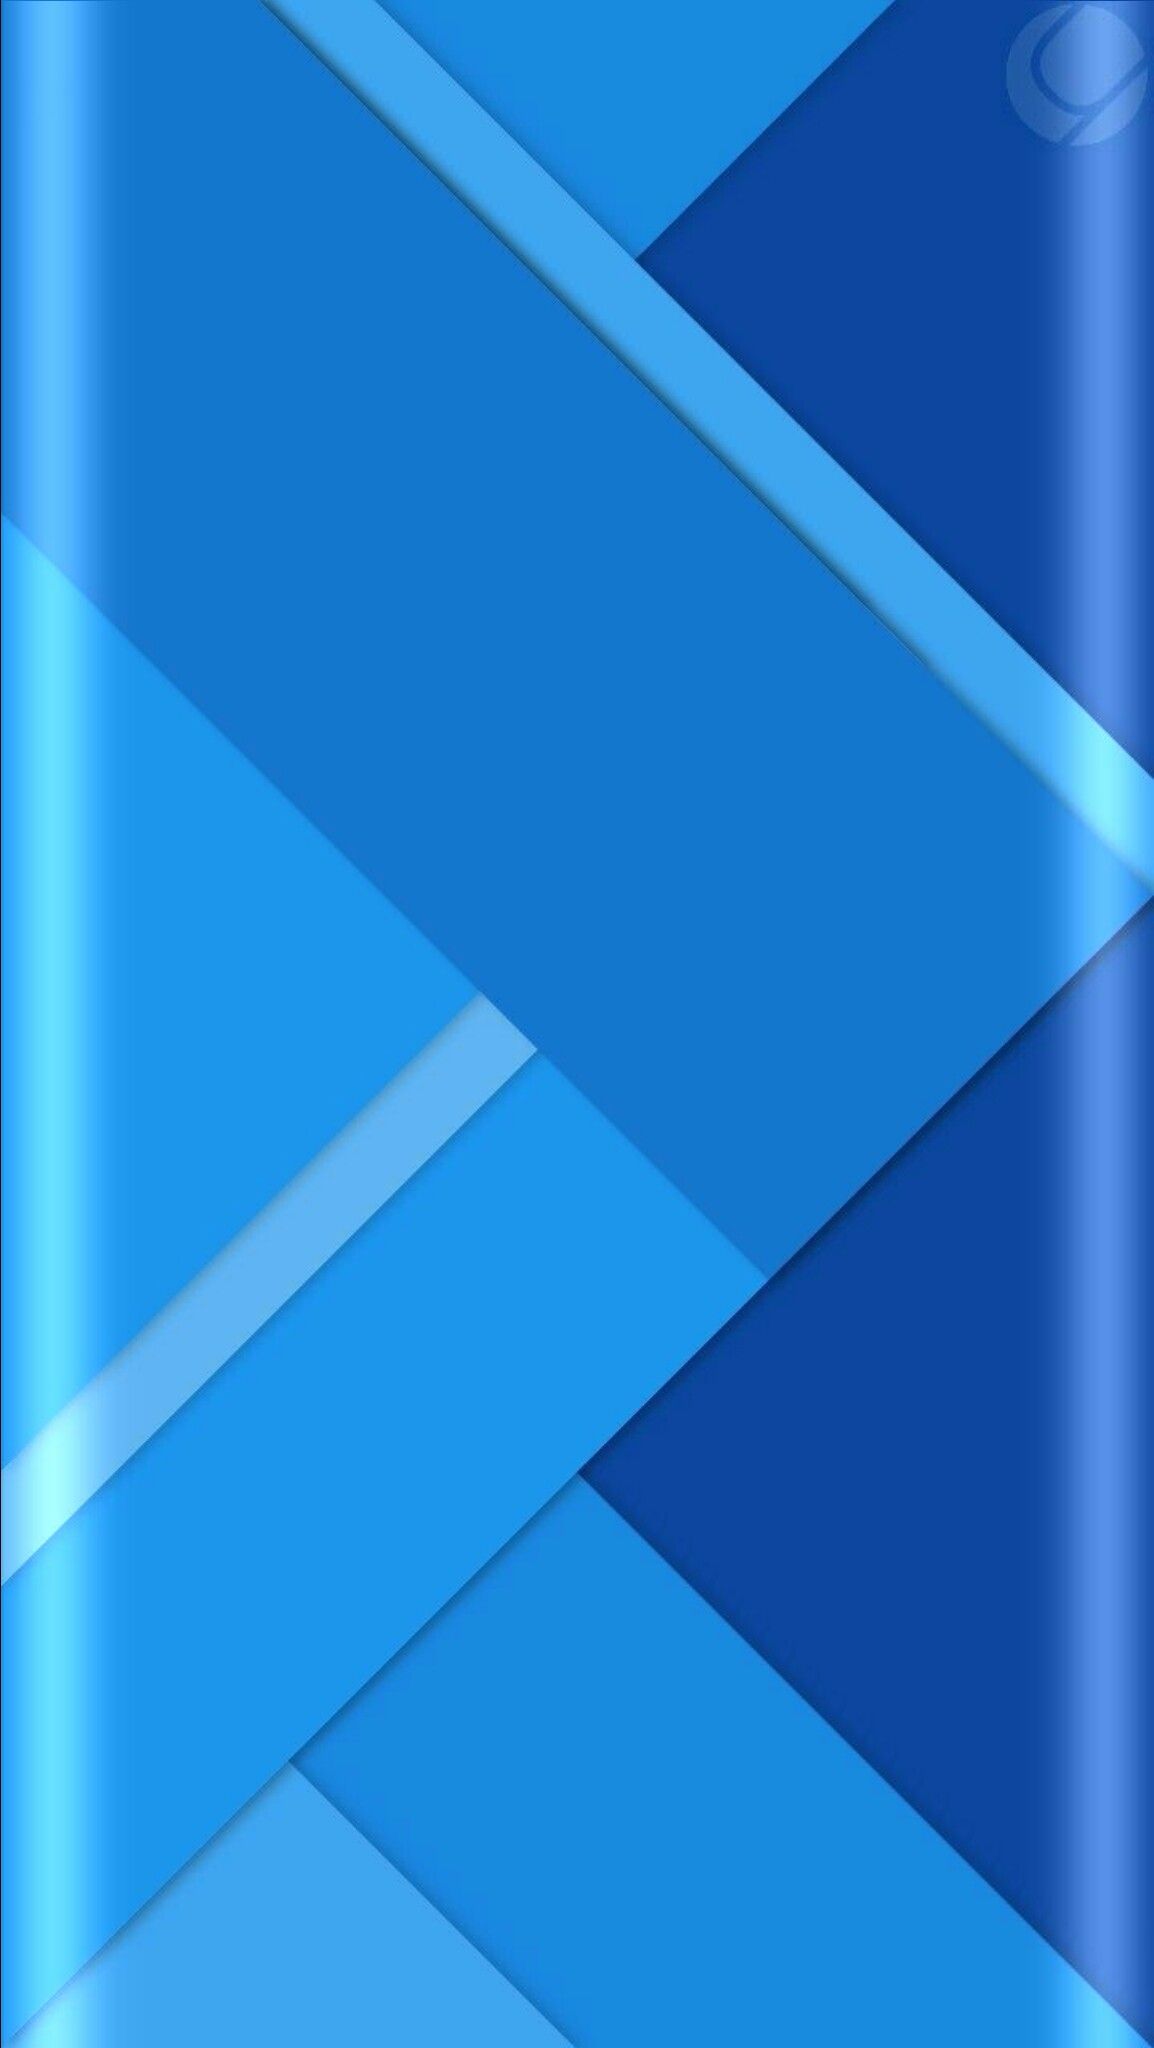 aplicativo de wallpaper,blu,blu cobalto,blu elettrico,acqua,linea